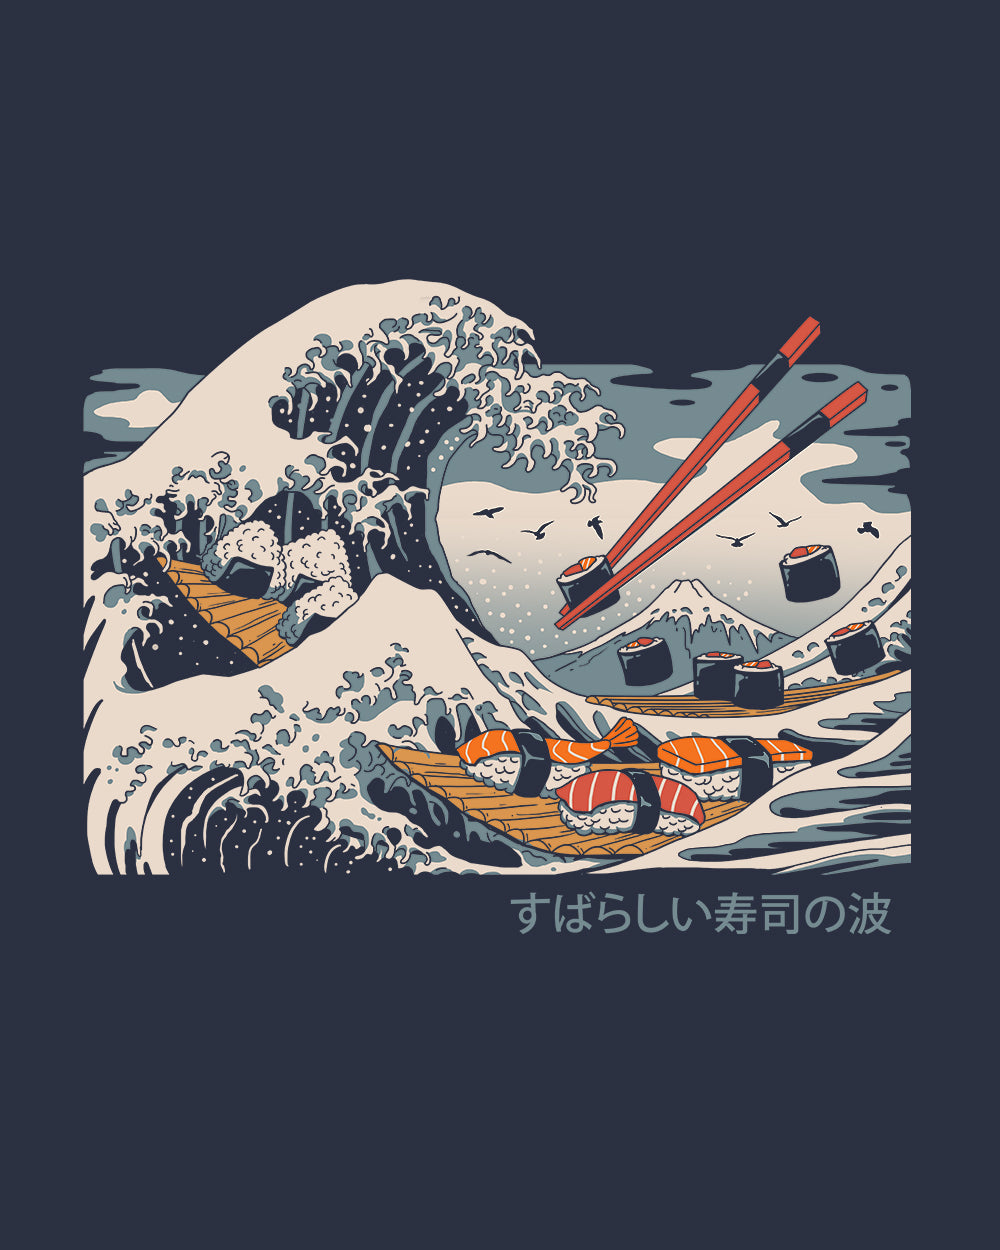 The Great Sushi Wave Kids T-Shirt Australia Online #colour_navy